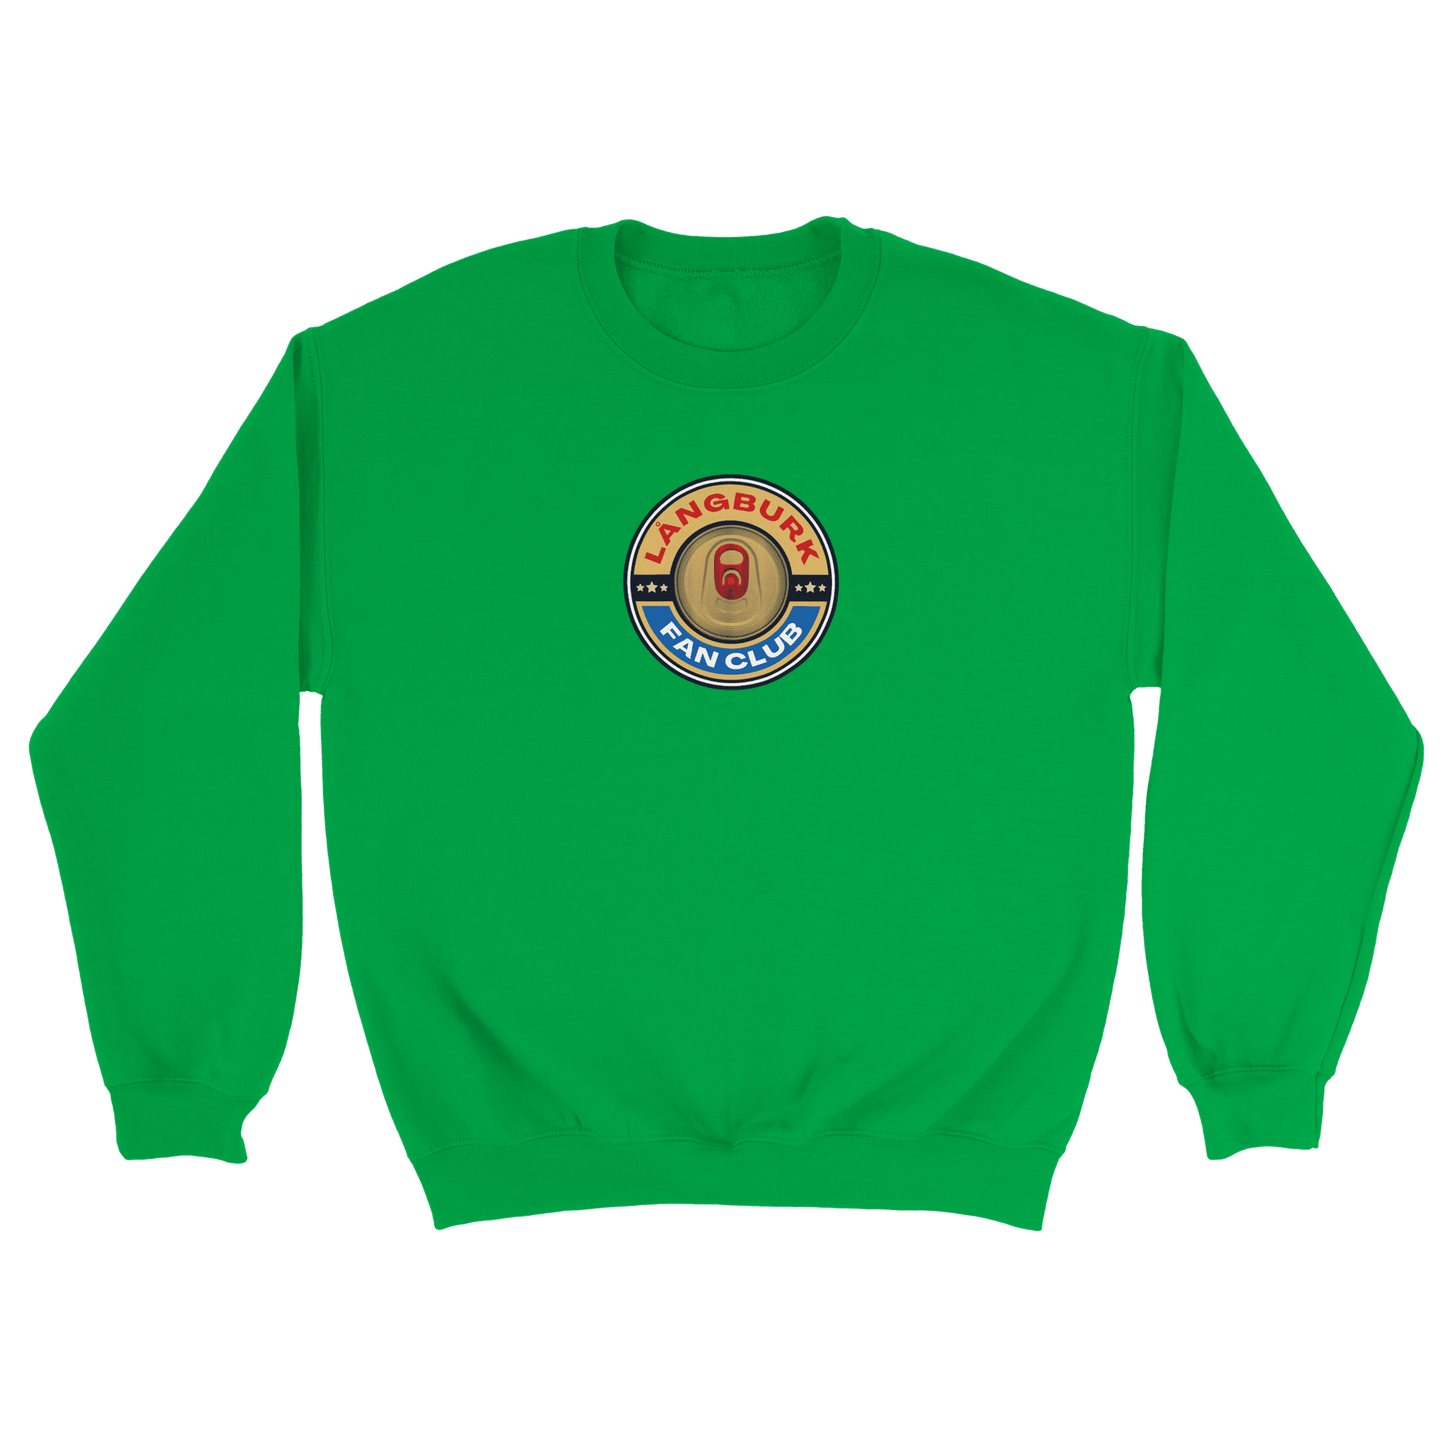 Långburk Fan Club Norrland Edition - Sweatshirt Grön